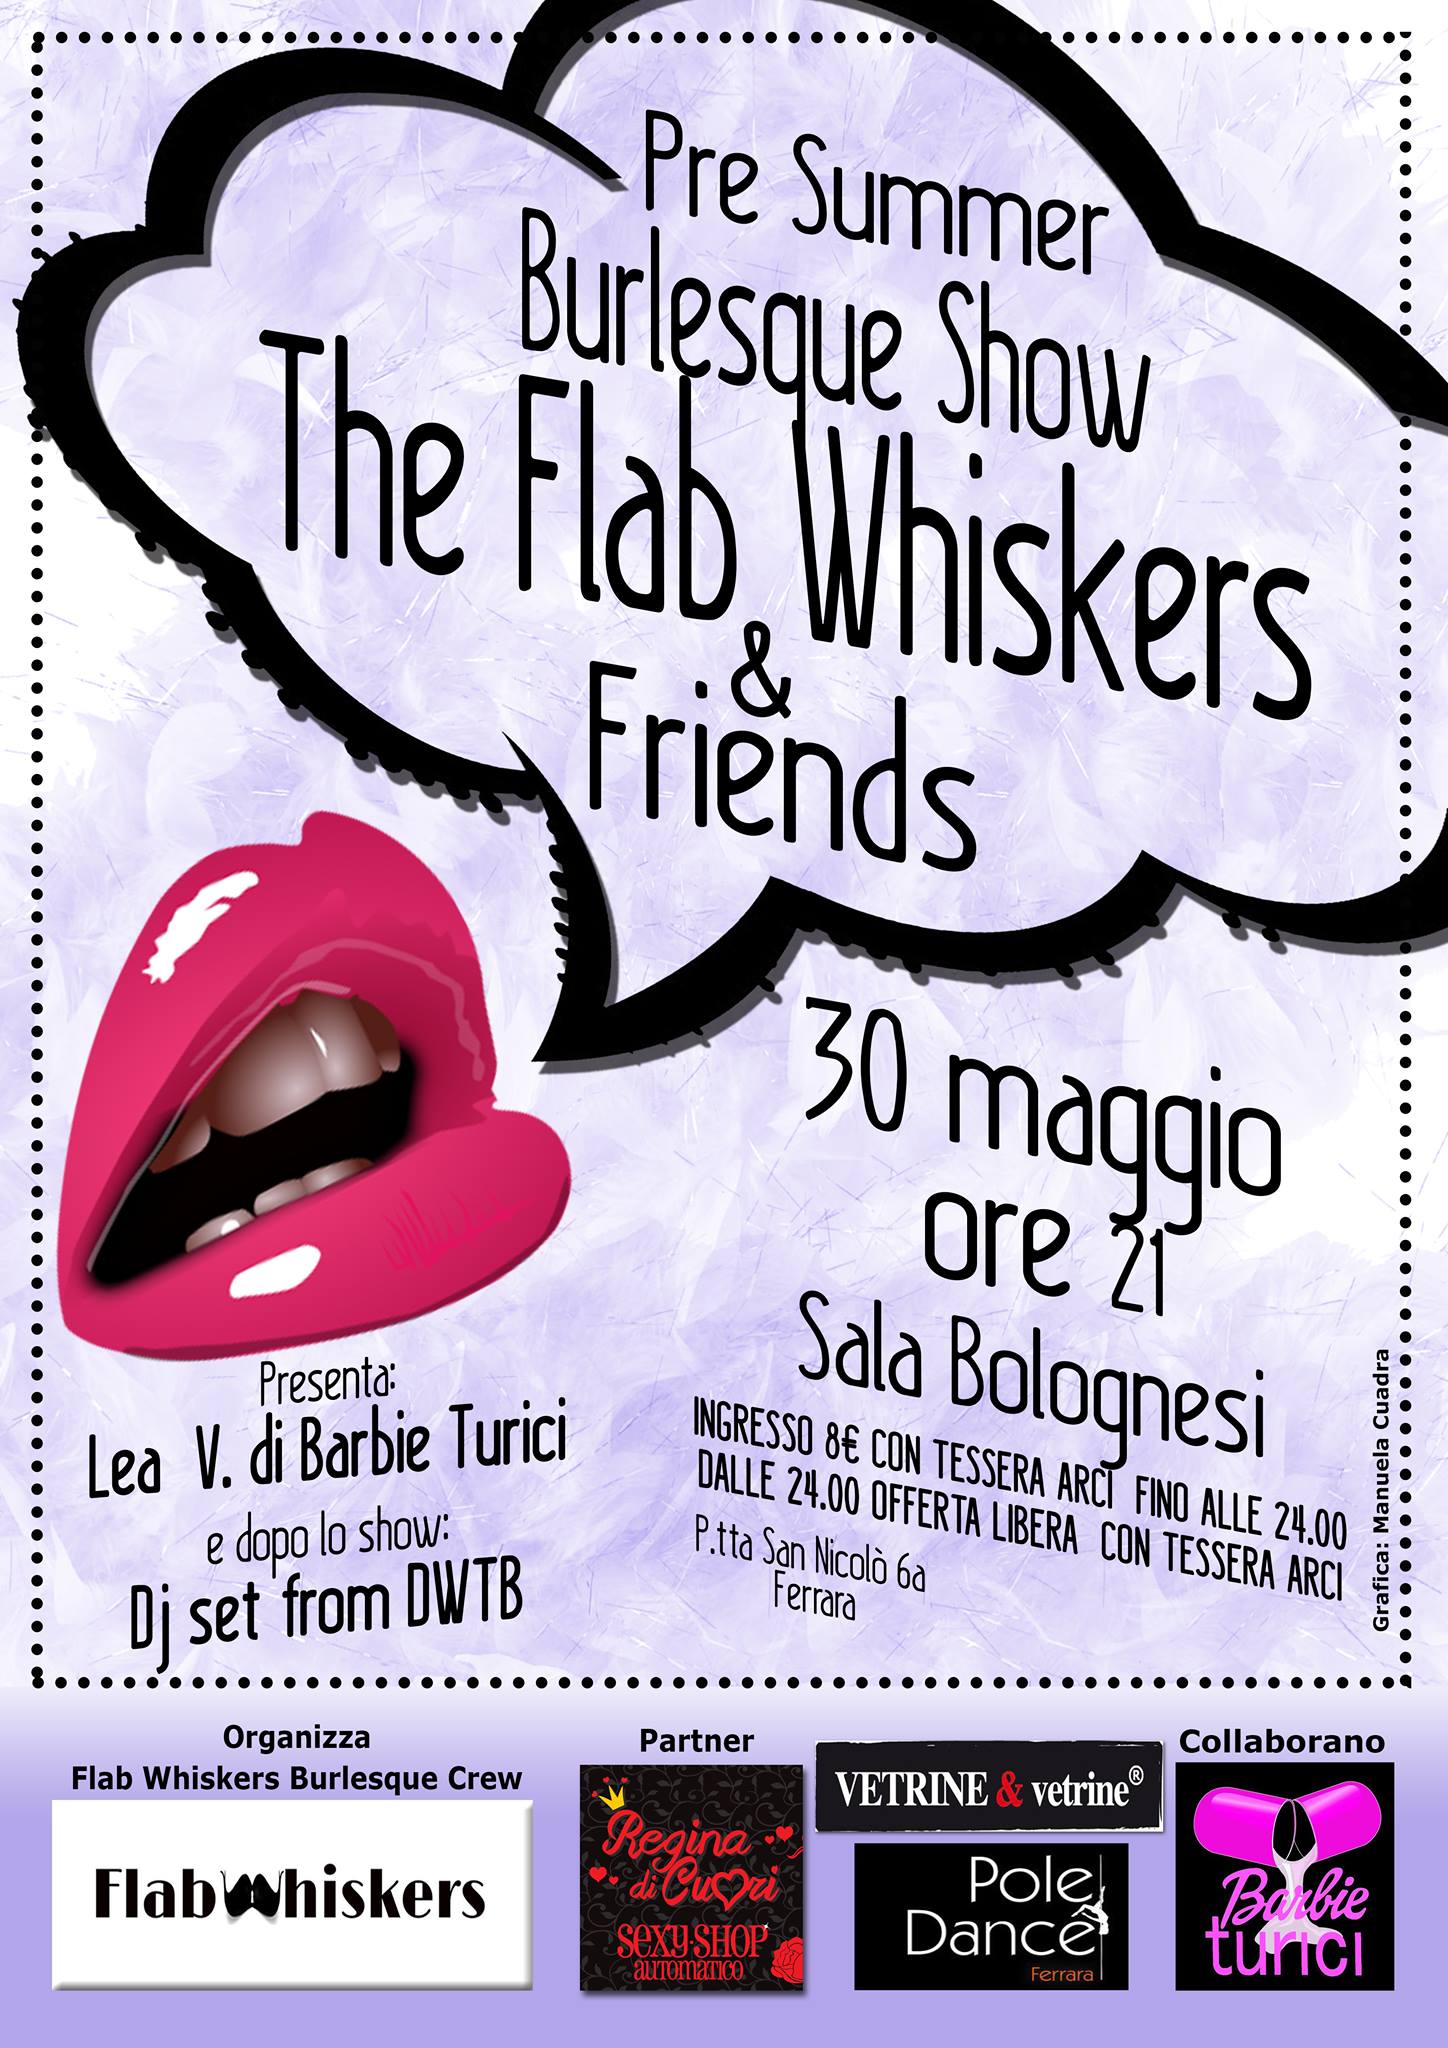 Blondy Violet, Flab Whiskers, guest performer, Pre summer show, Ferrara